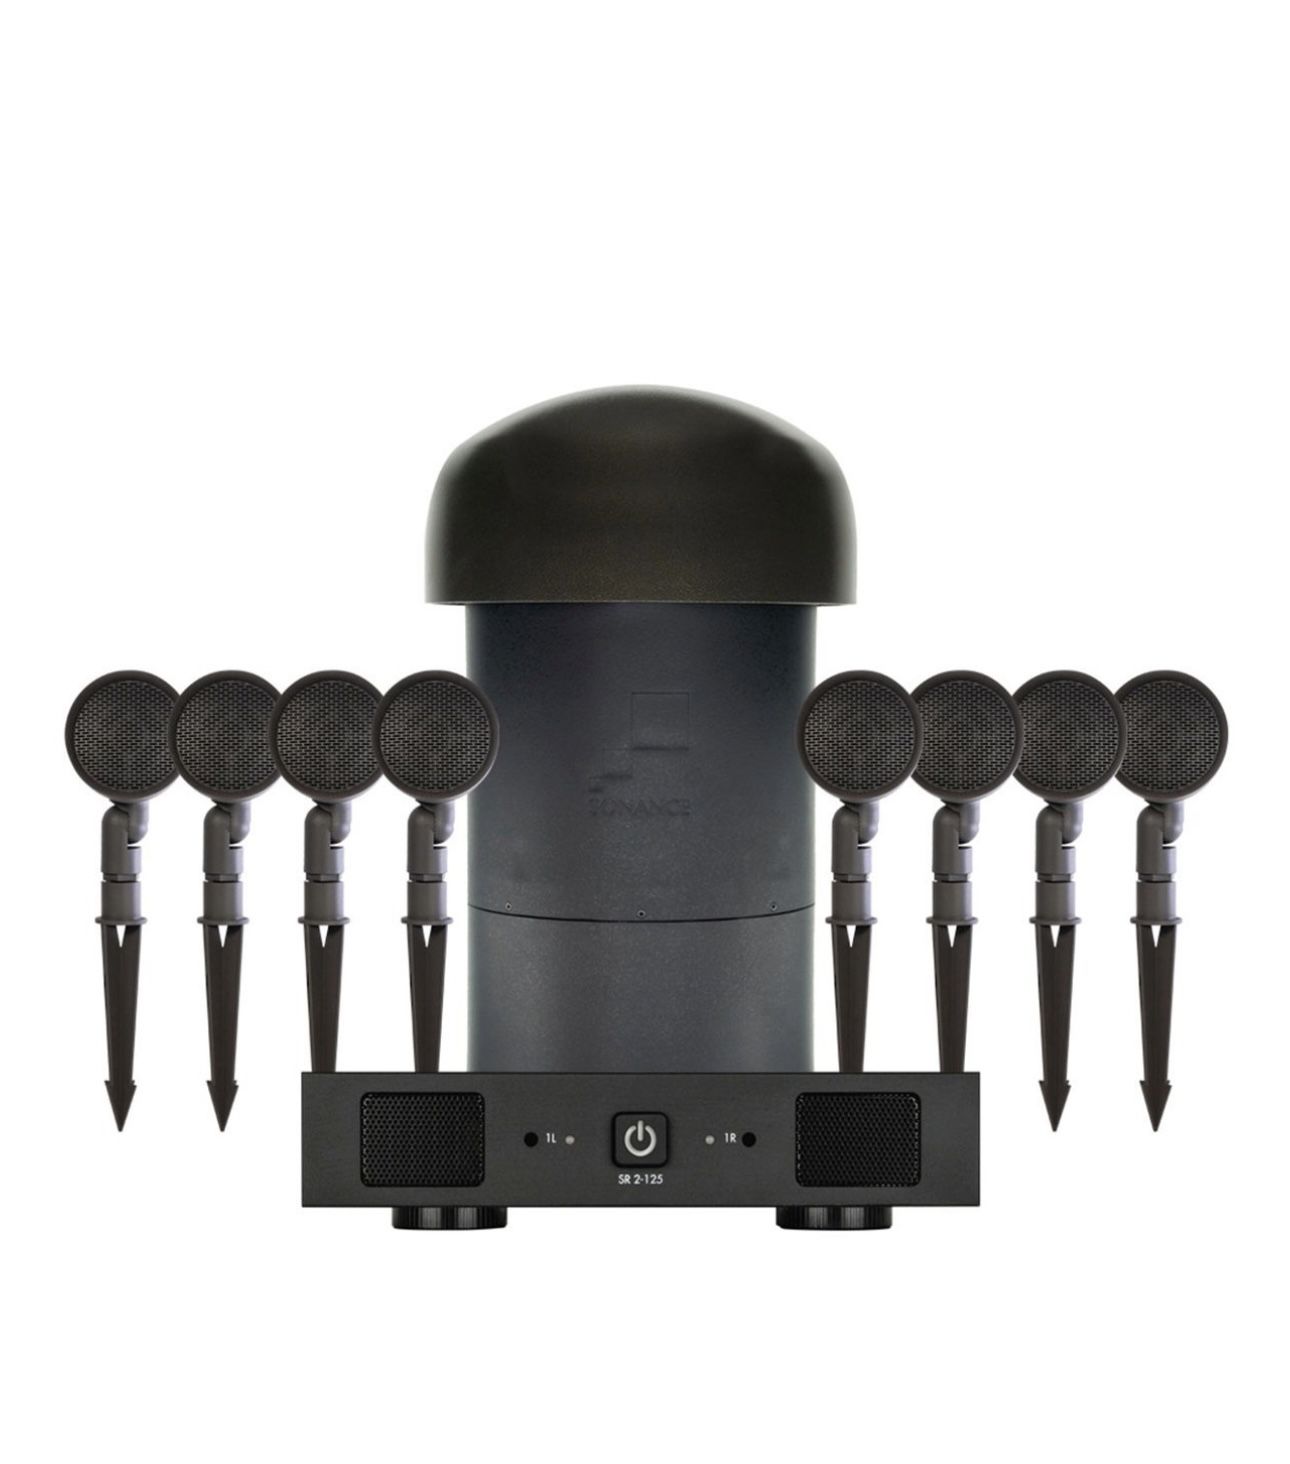 Sonance - SGS 8.1 SYSTEM W/SR 2-125 AMP - Garden Series 8.1-Ch. Outdoor Speaker System with 2-Ch. Amplifier (Each)